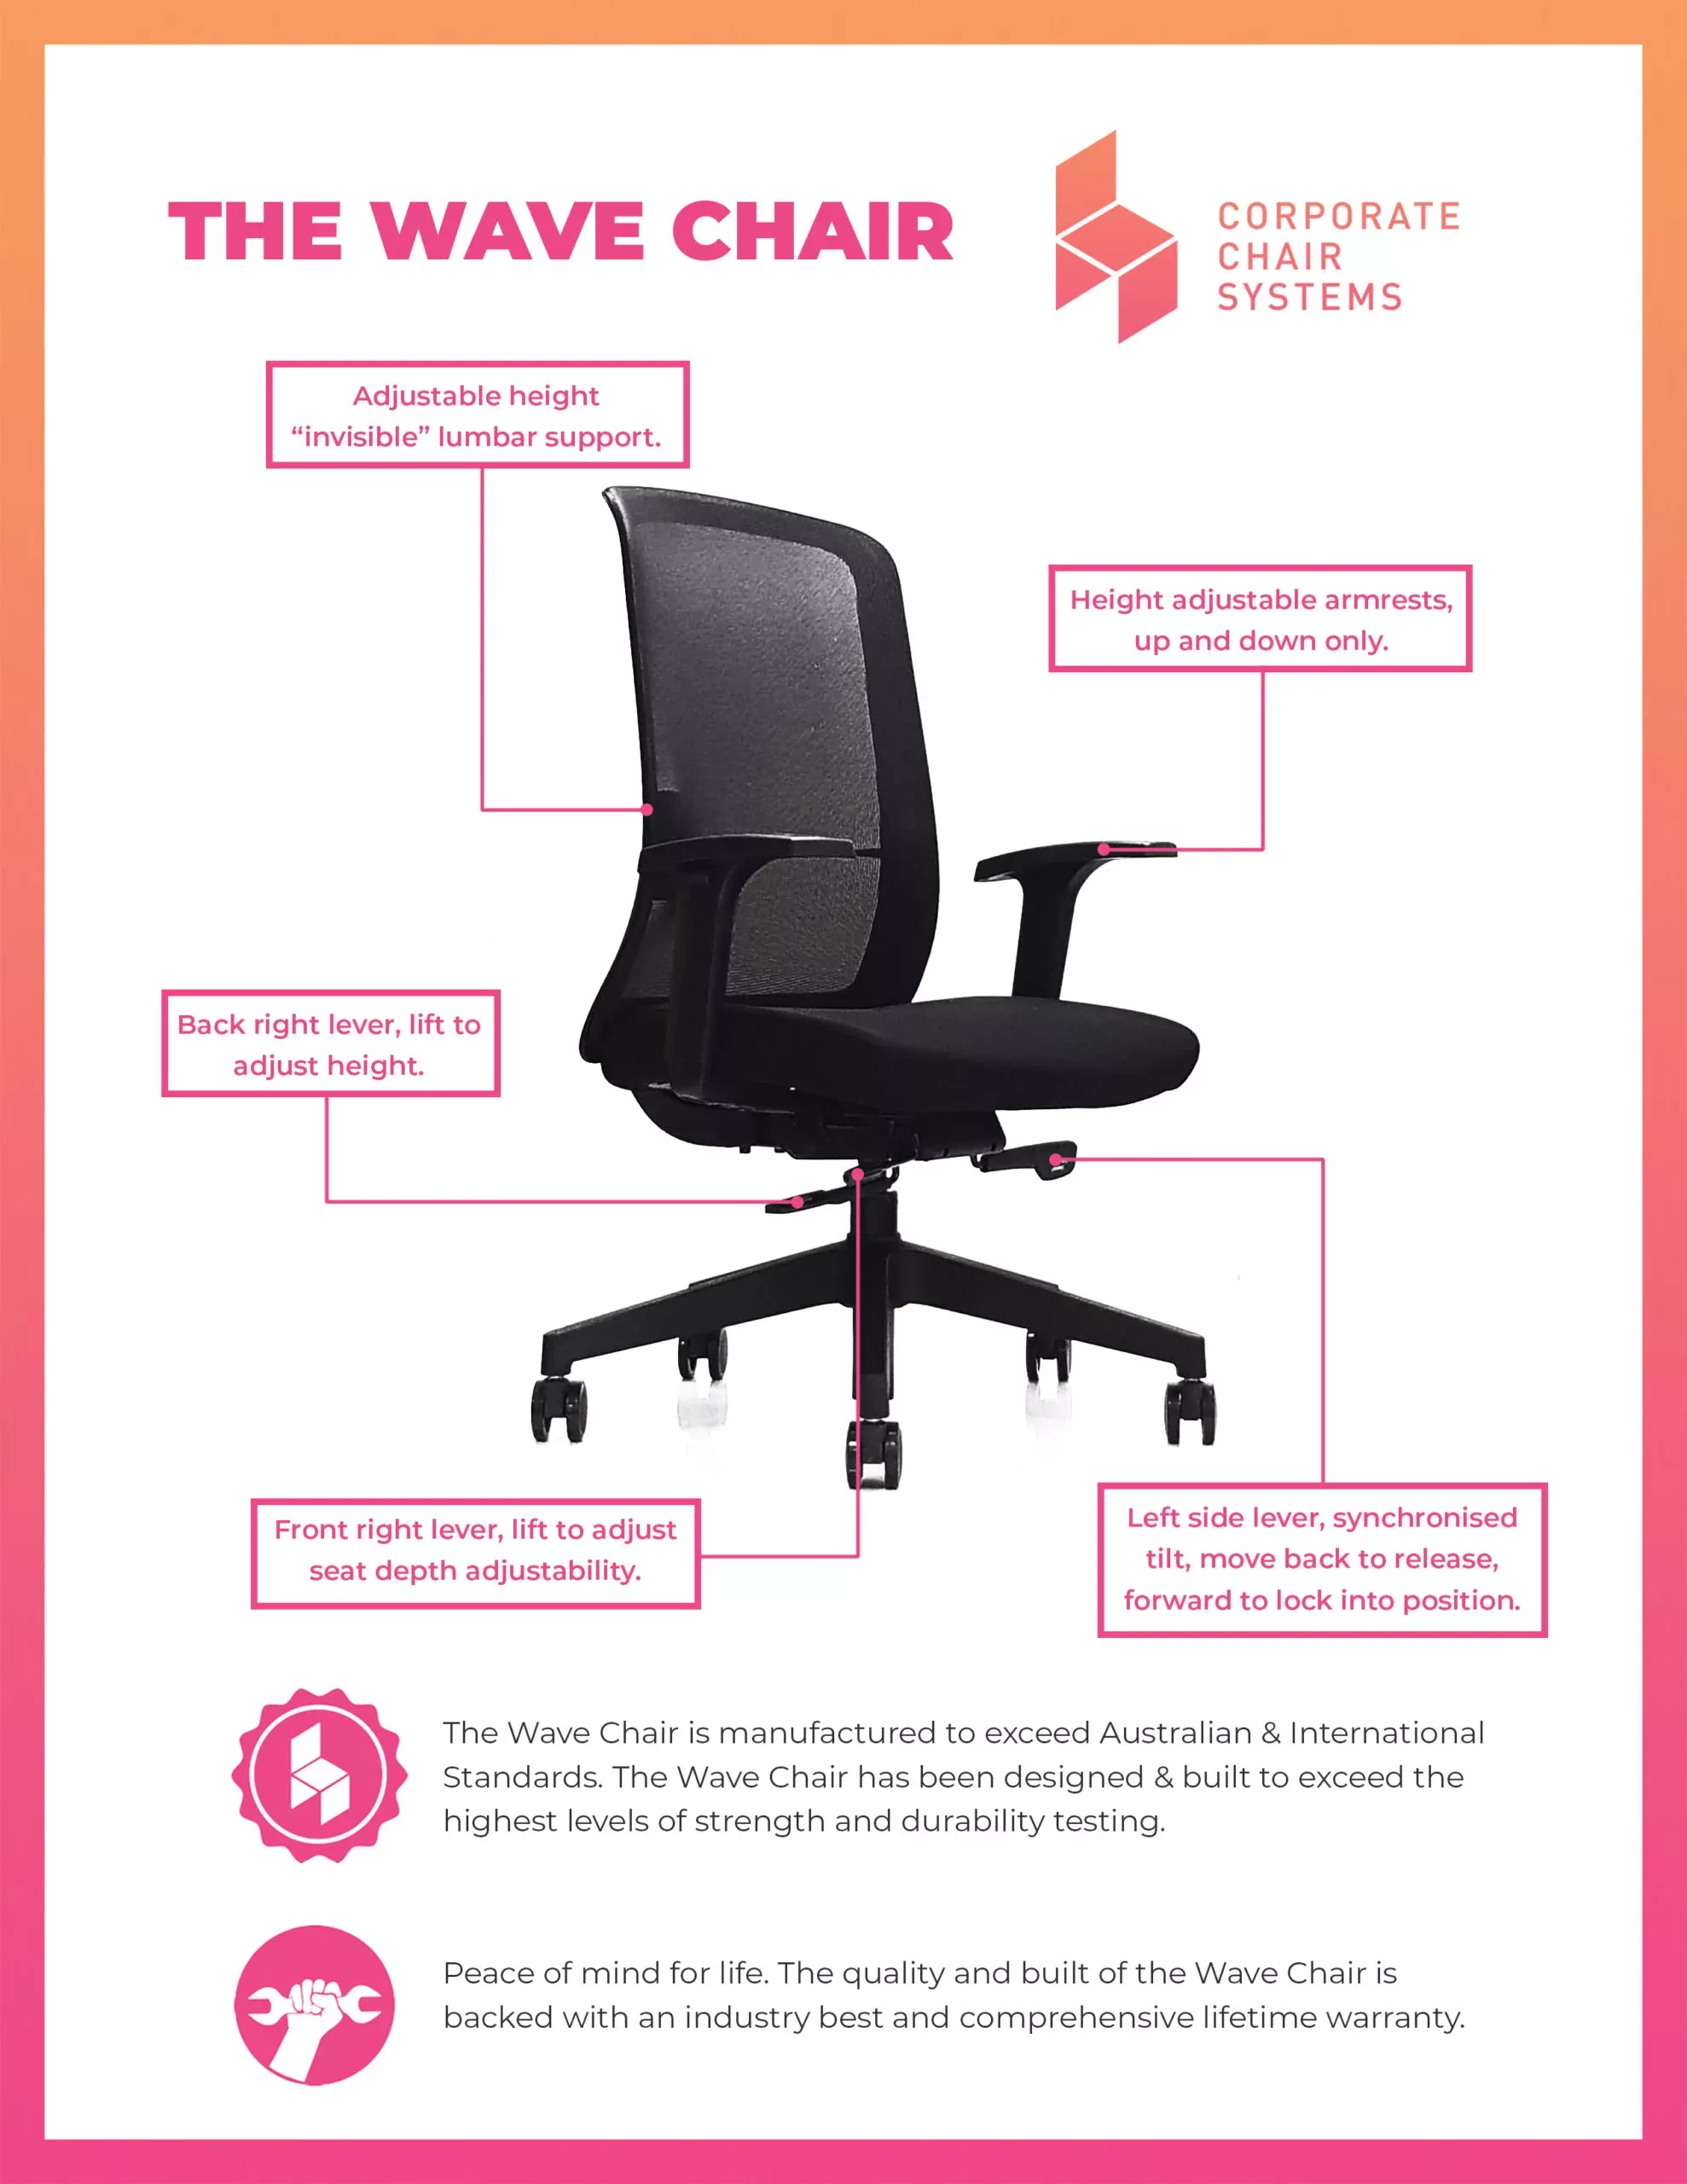 office chairs australia